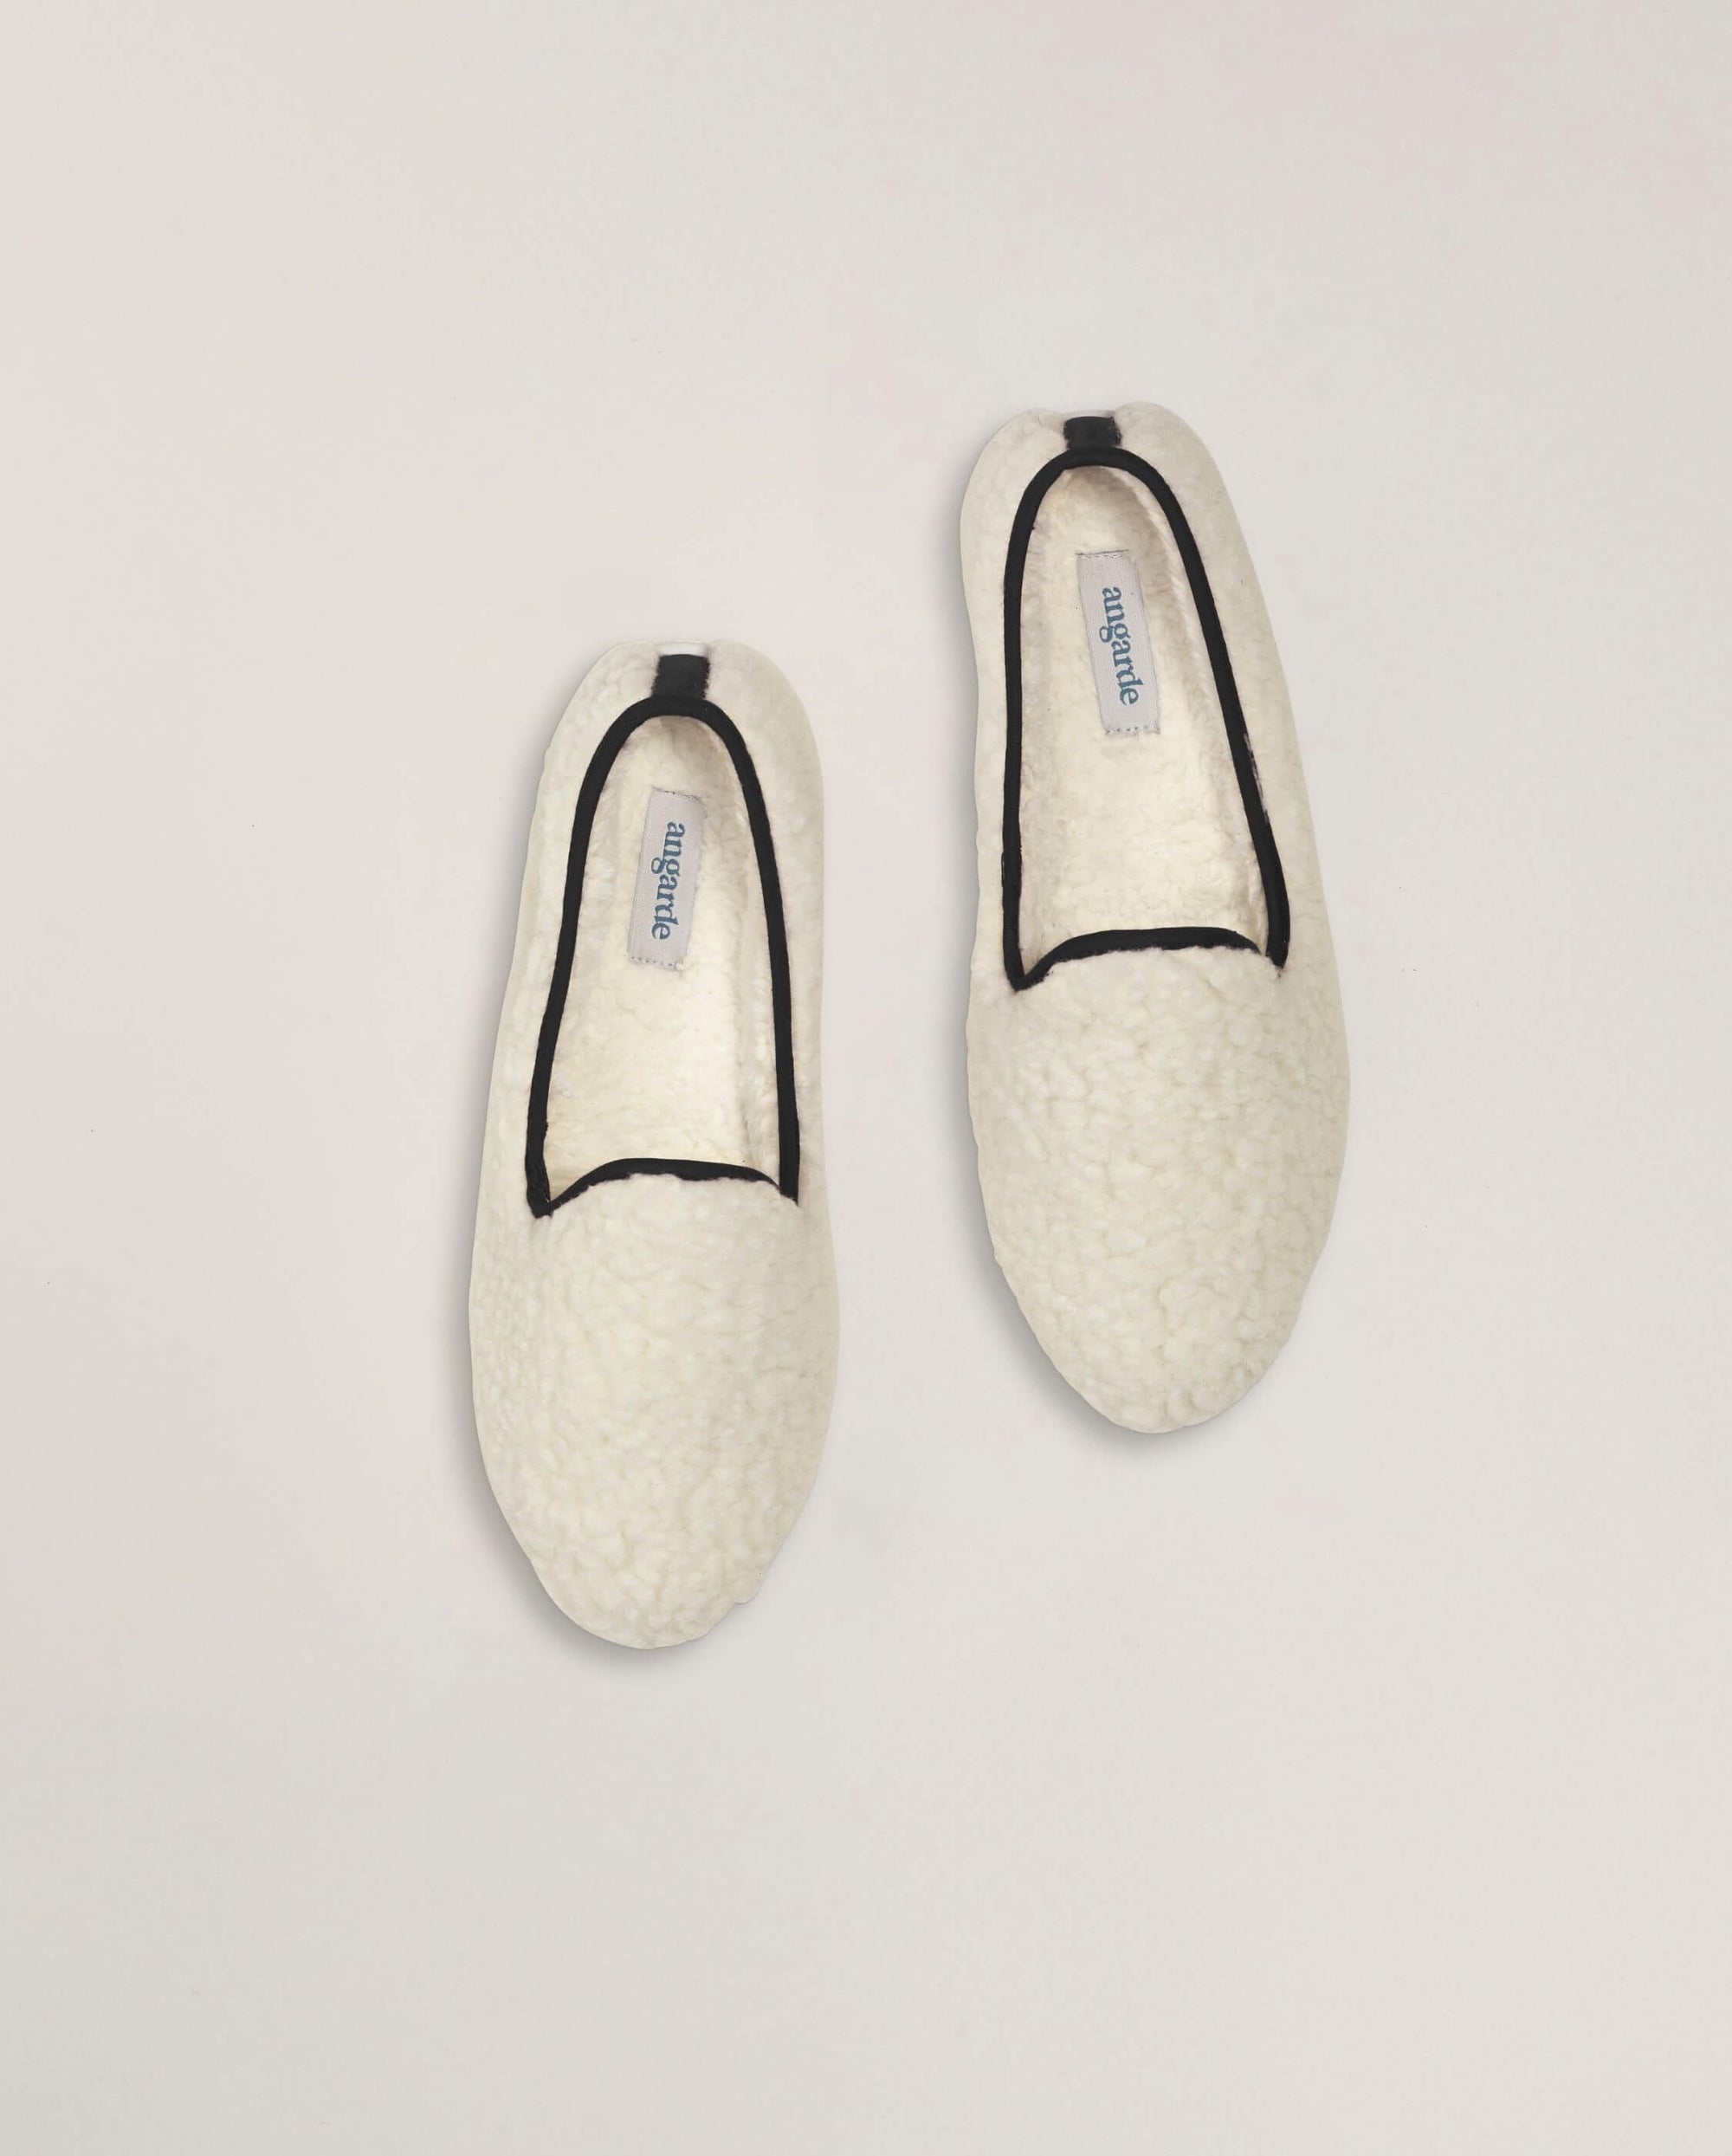 Women's wool terry slipper, white and black